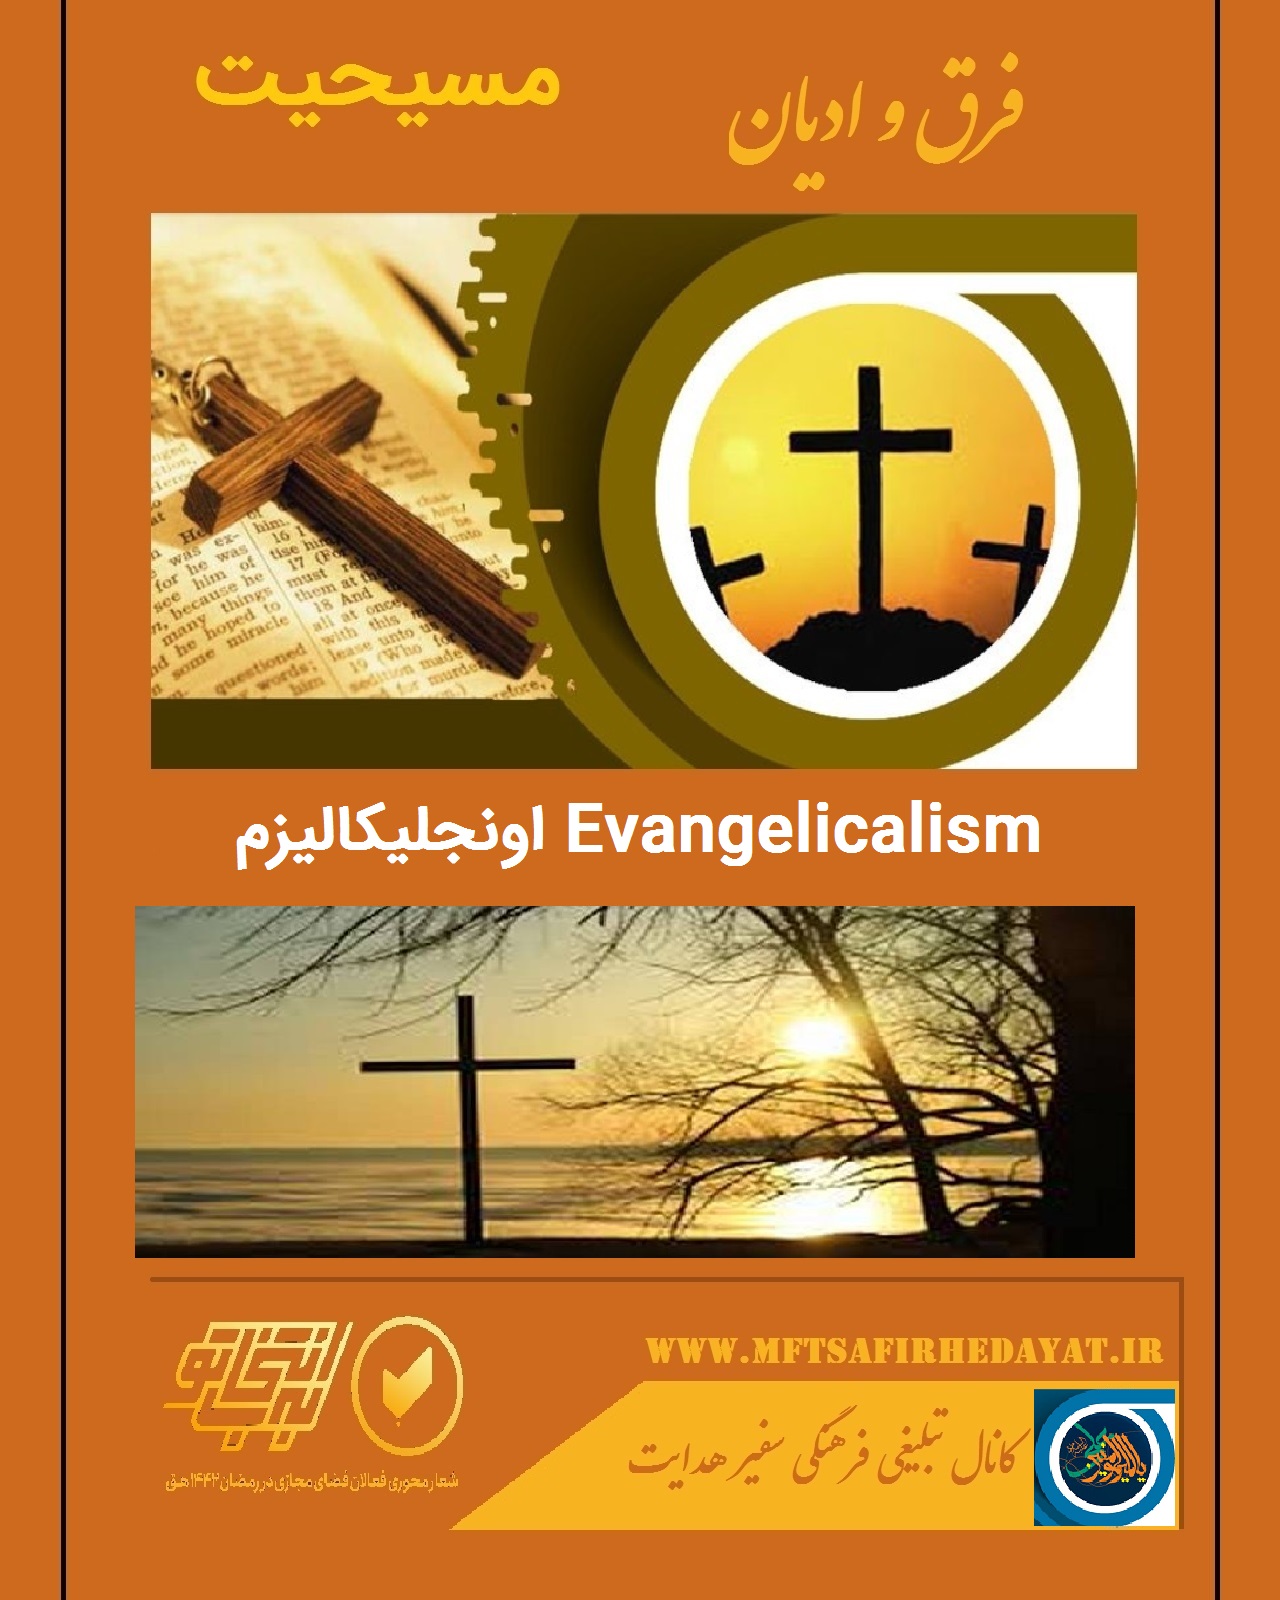 اونجلیکالیزم Evangelicalism